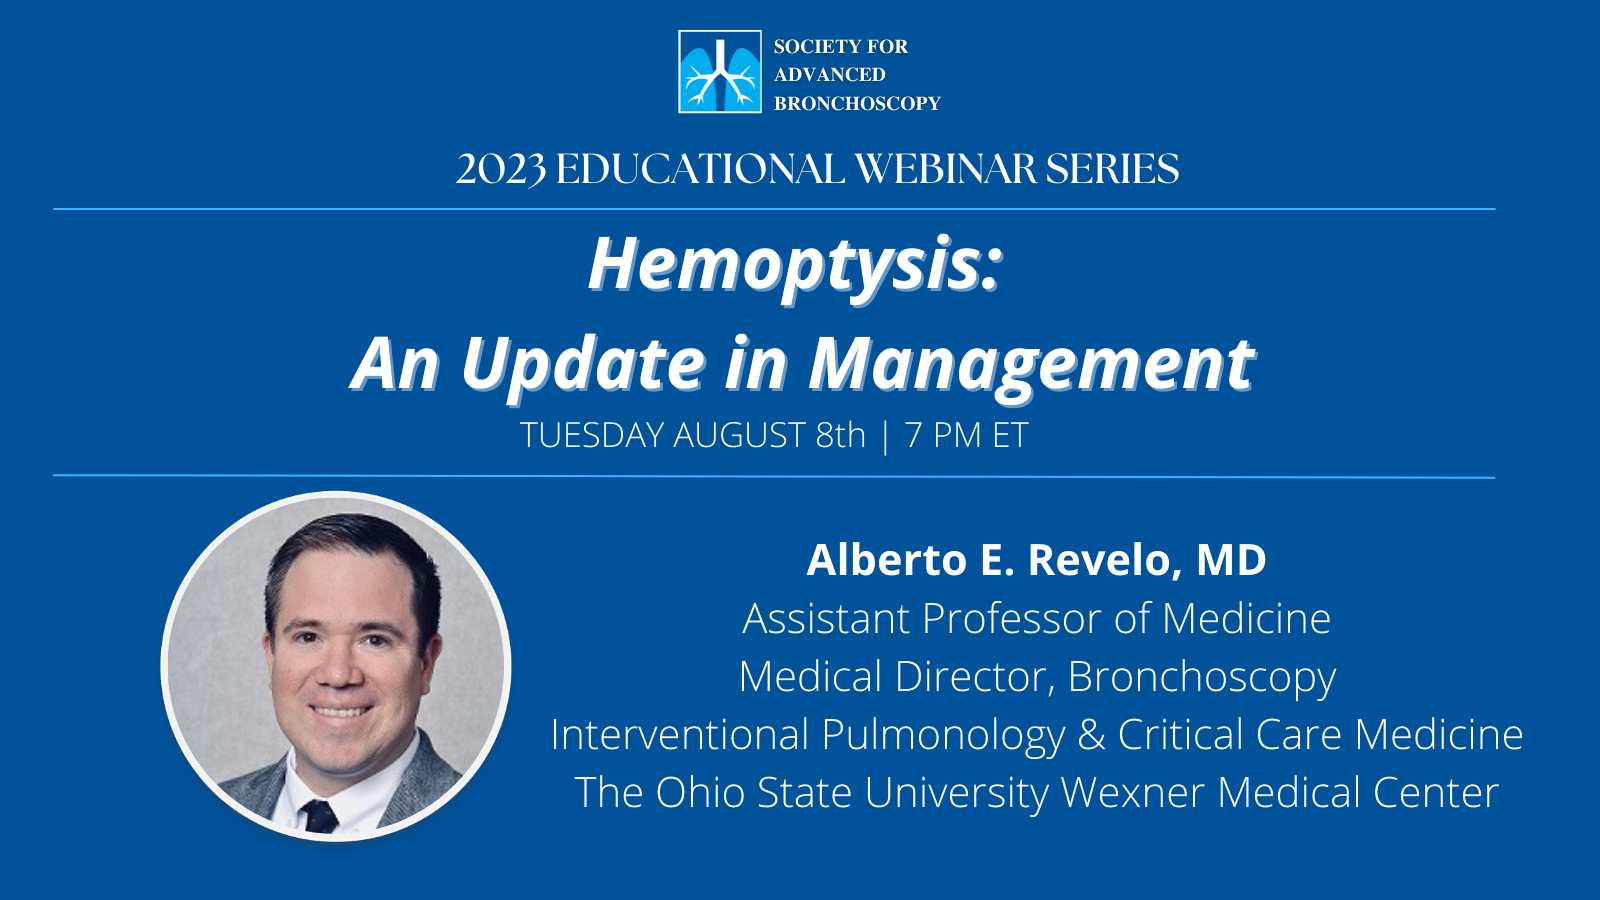 Alberto Revelo MD  Ohio State University Wexner Medical Center